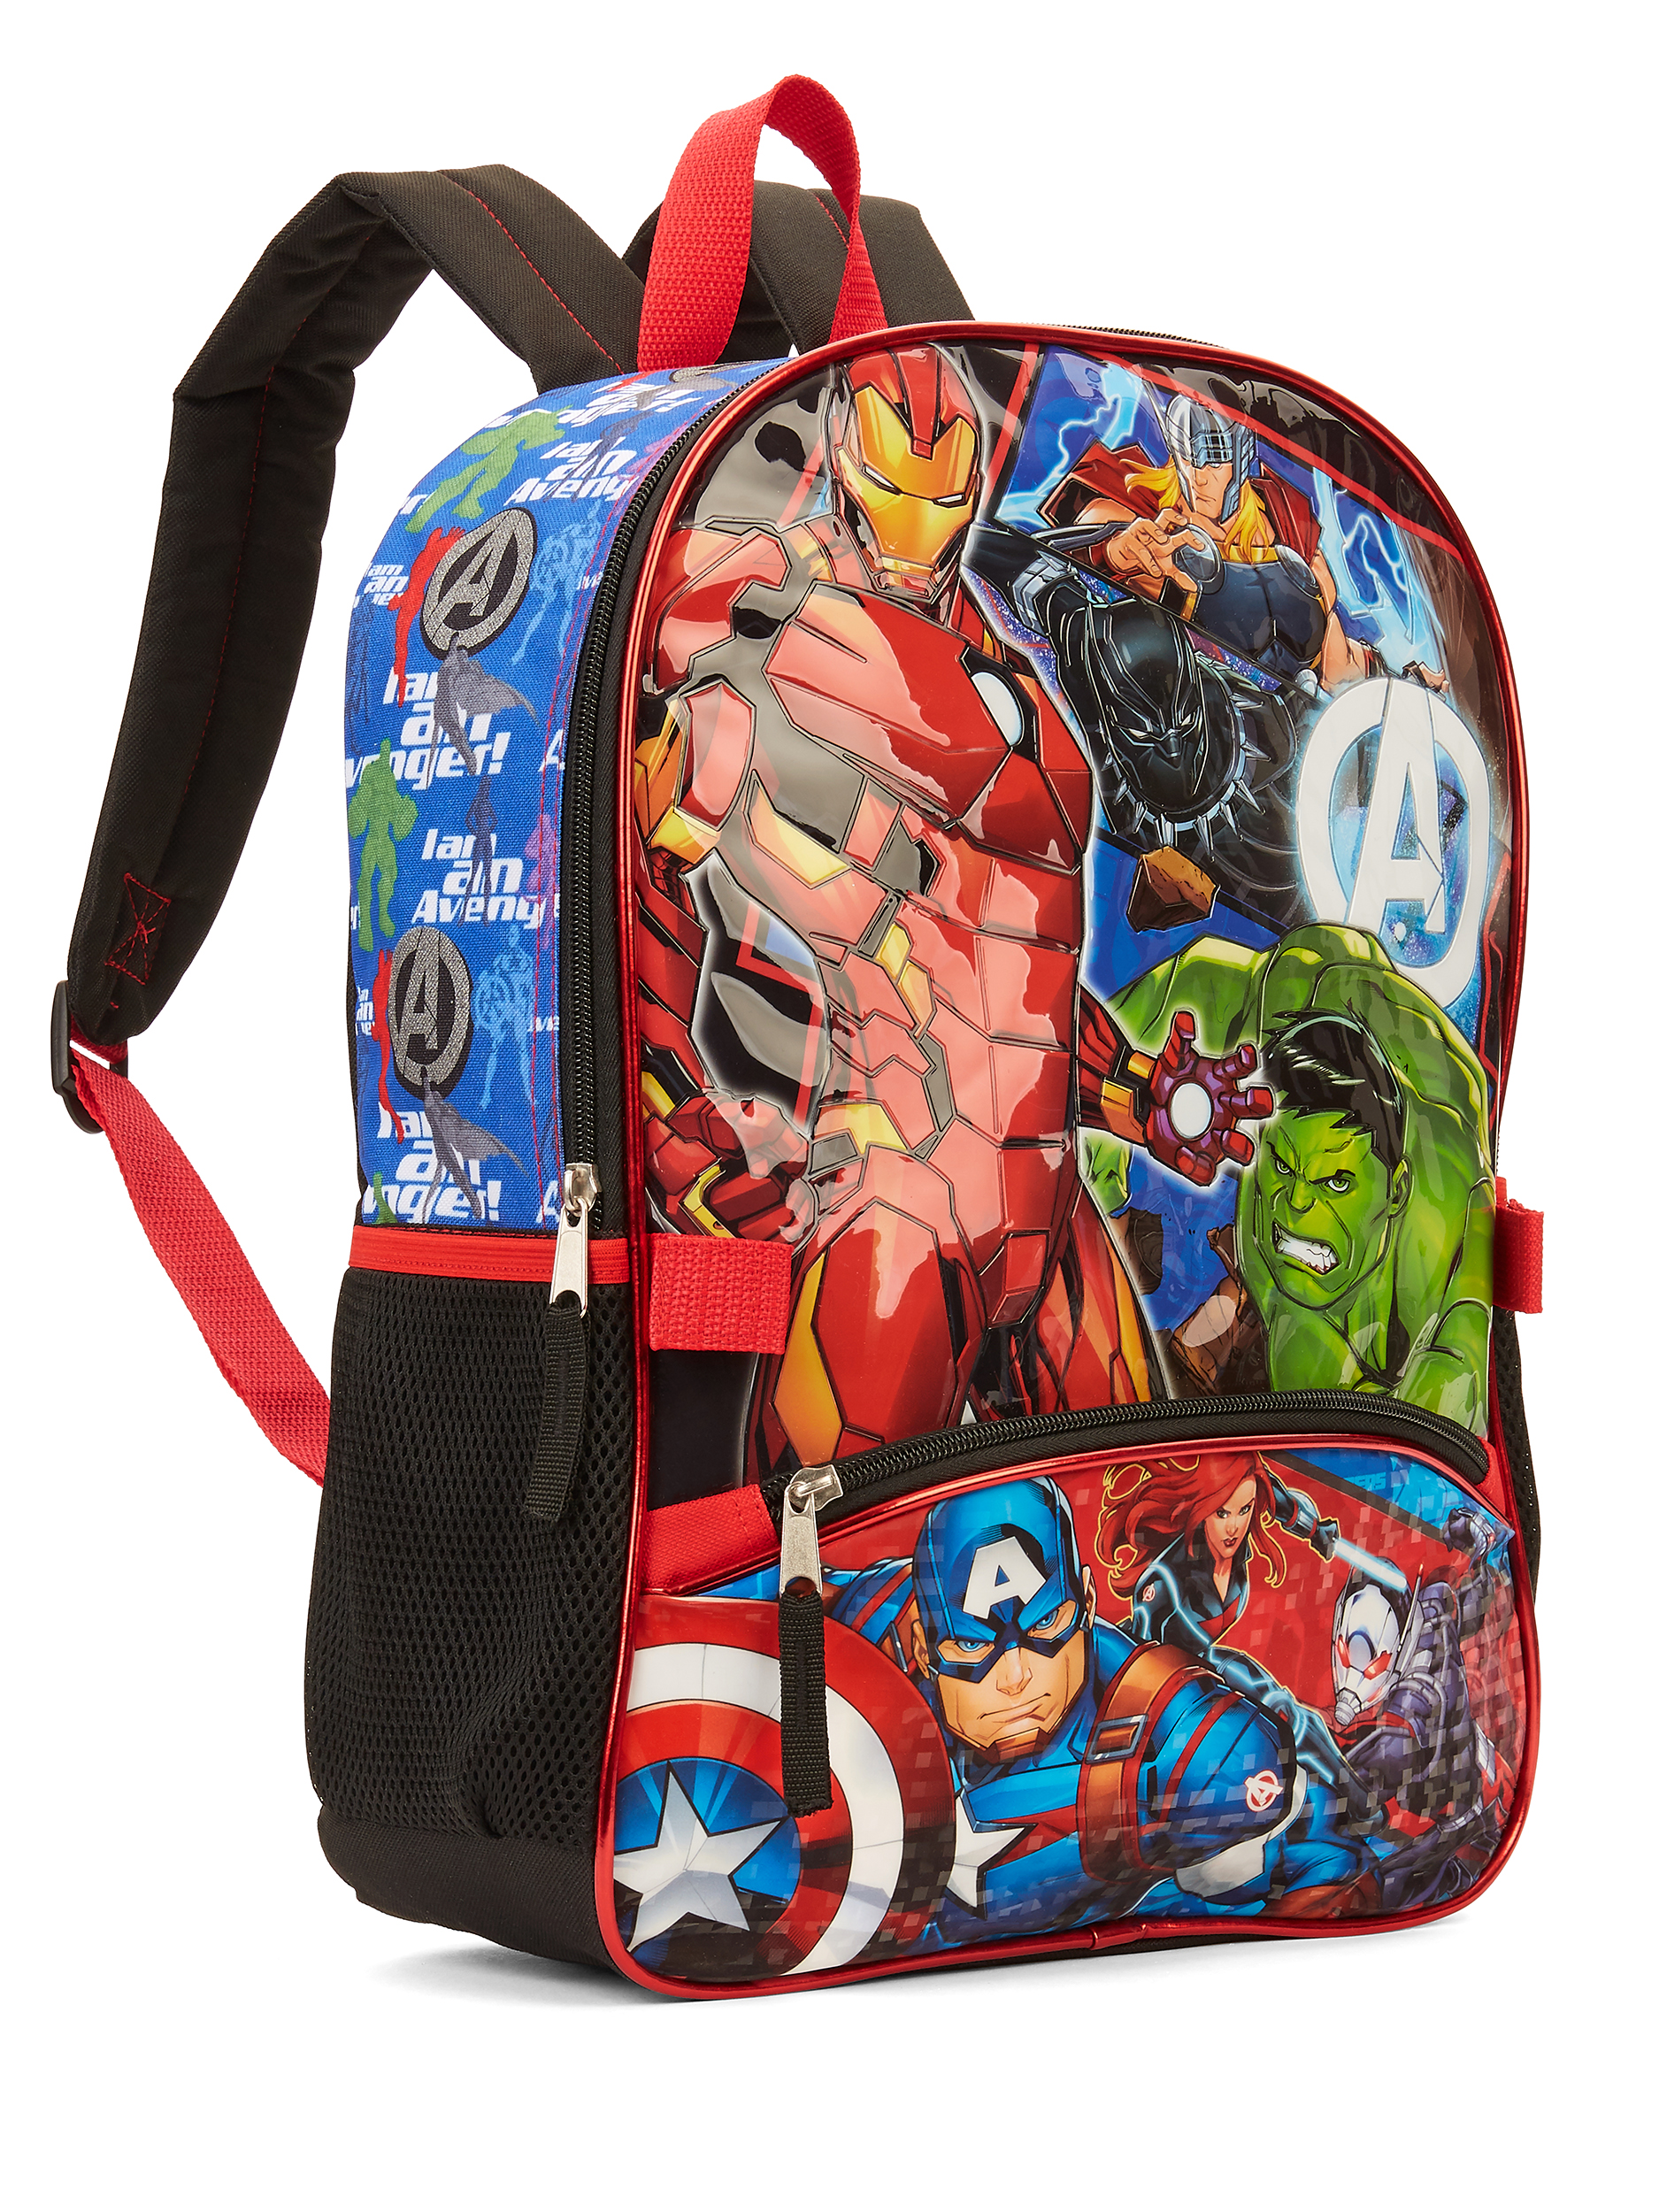 Marvel Avengers Boys' Backpack with Lunch Bag Set - image 2 of 3